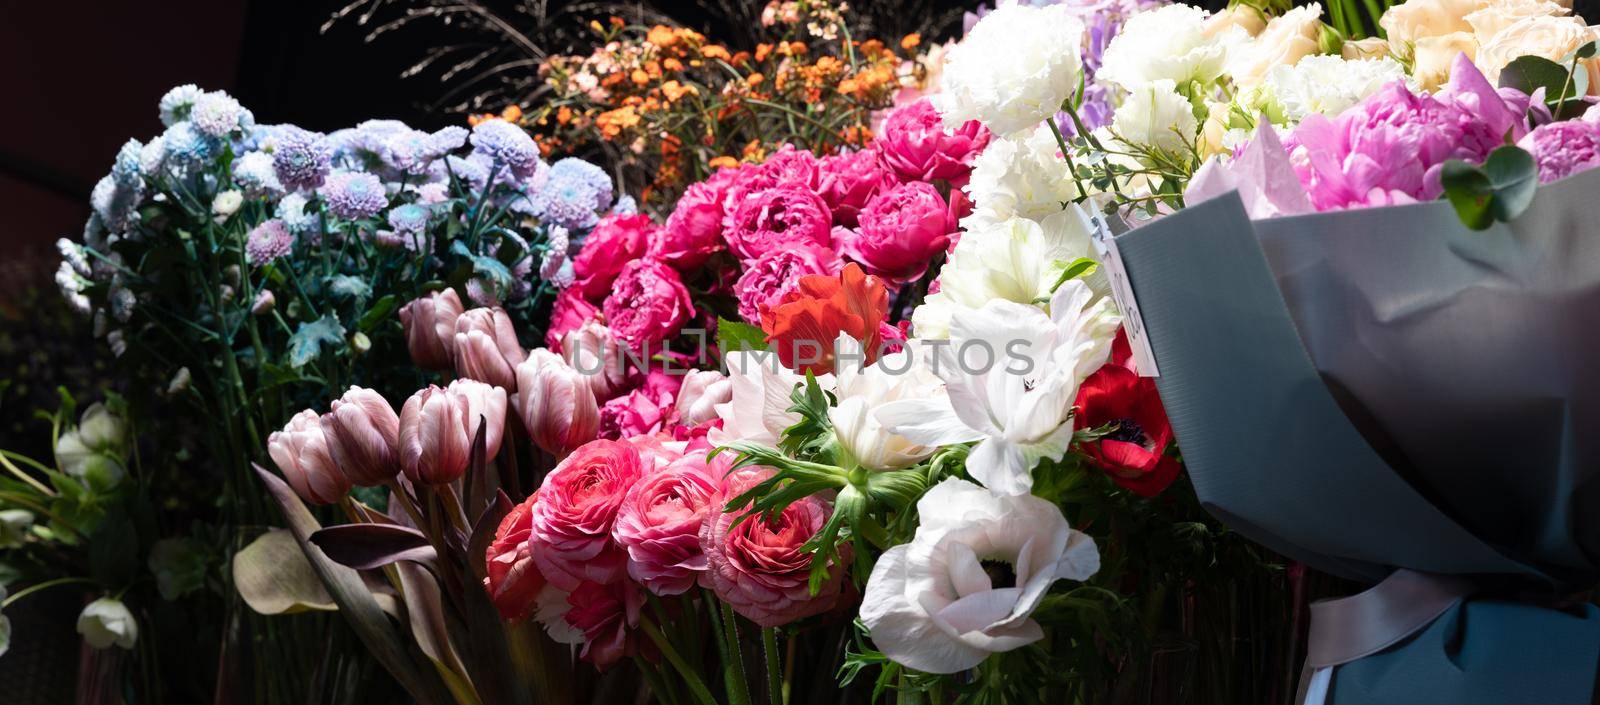 floristic arrangement of fresh cut flowers on a store shelf by TRMK